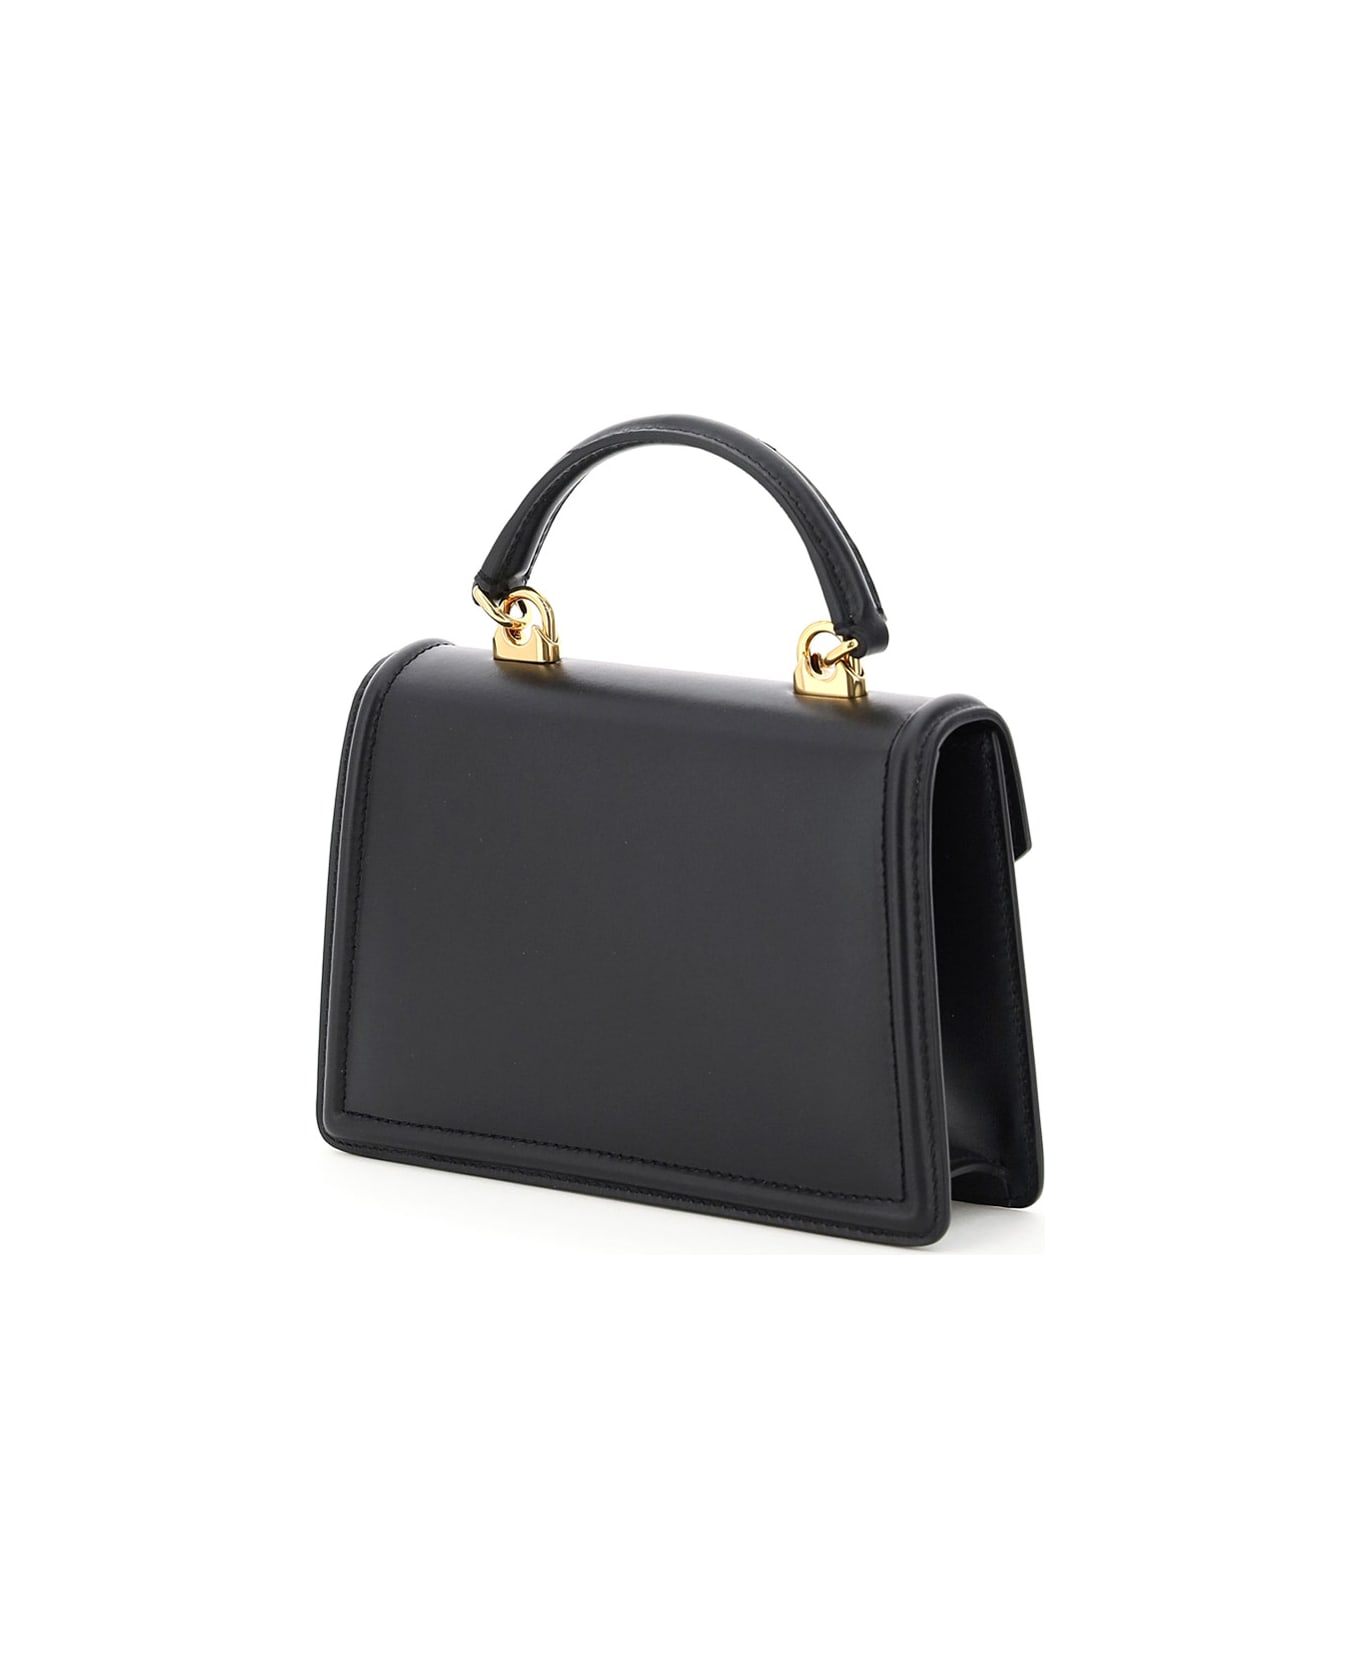 Dolce & Gabbana Devotion Small Bag - Black